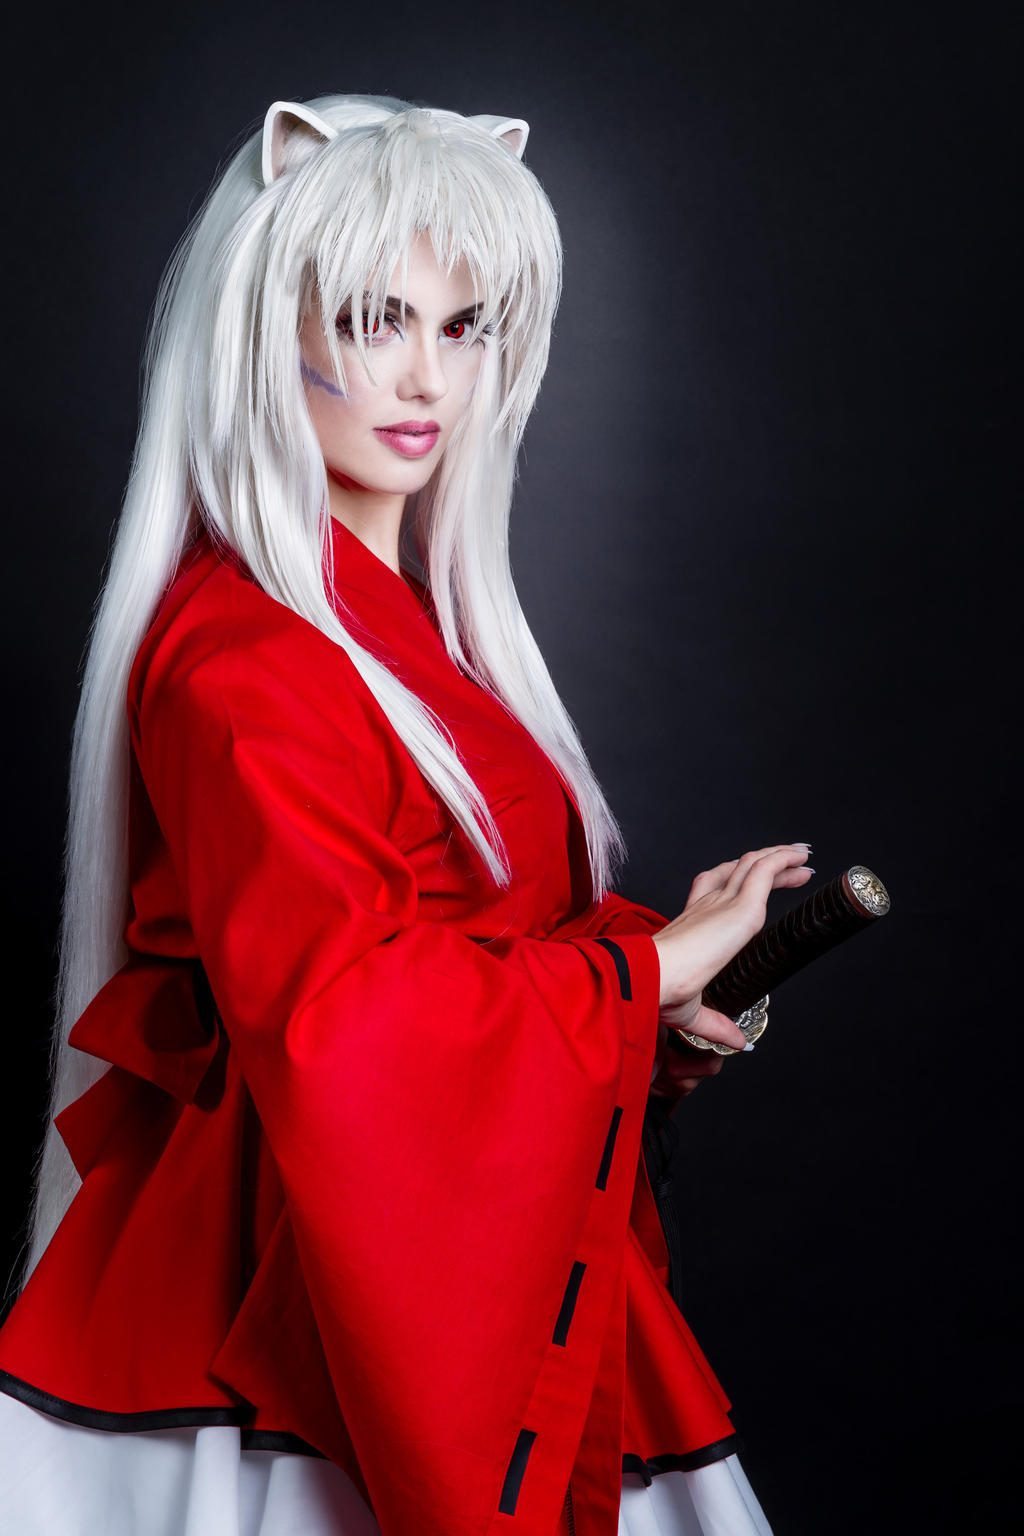 female_youkai_inuyasha_cosplay_by_whiteravencosplay-d9hbah6.jpg.